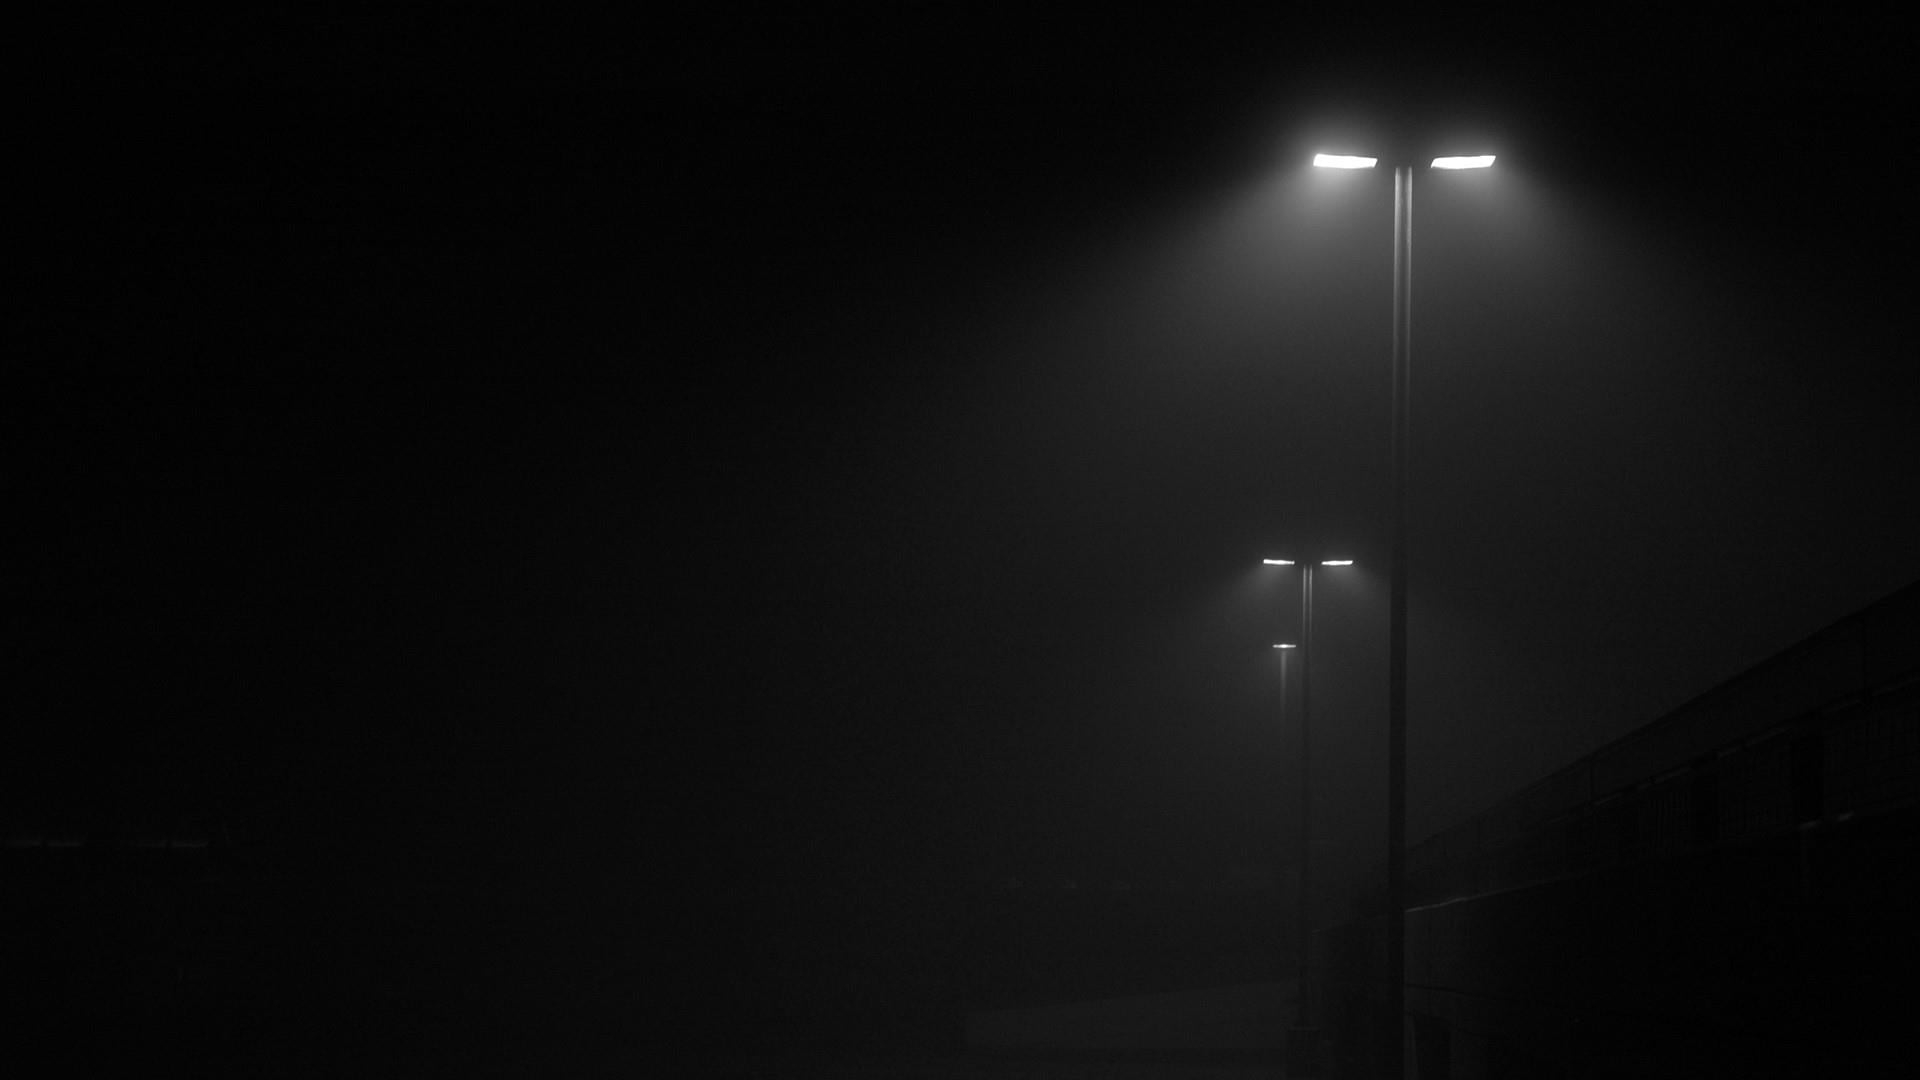 Wallpaper black, black and white, night, street light, darkness, lighting